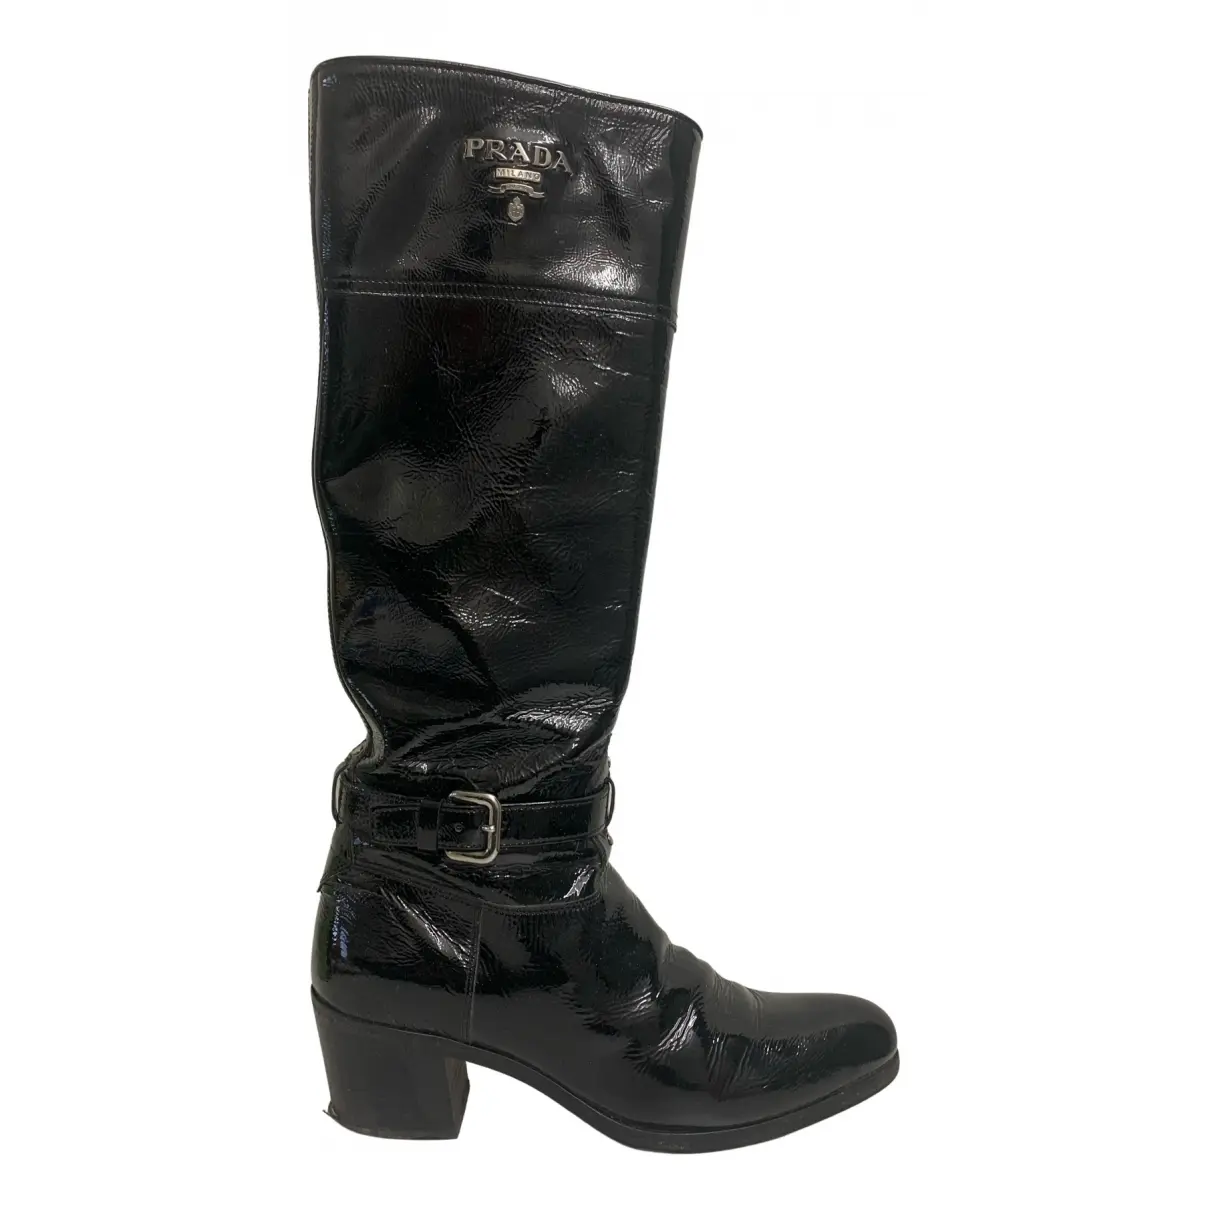 Patent leather riding boots Prada